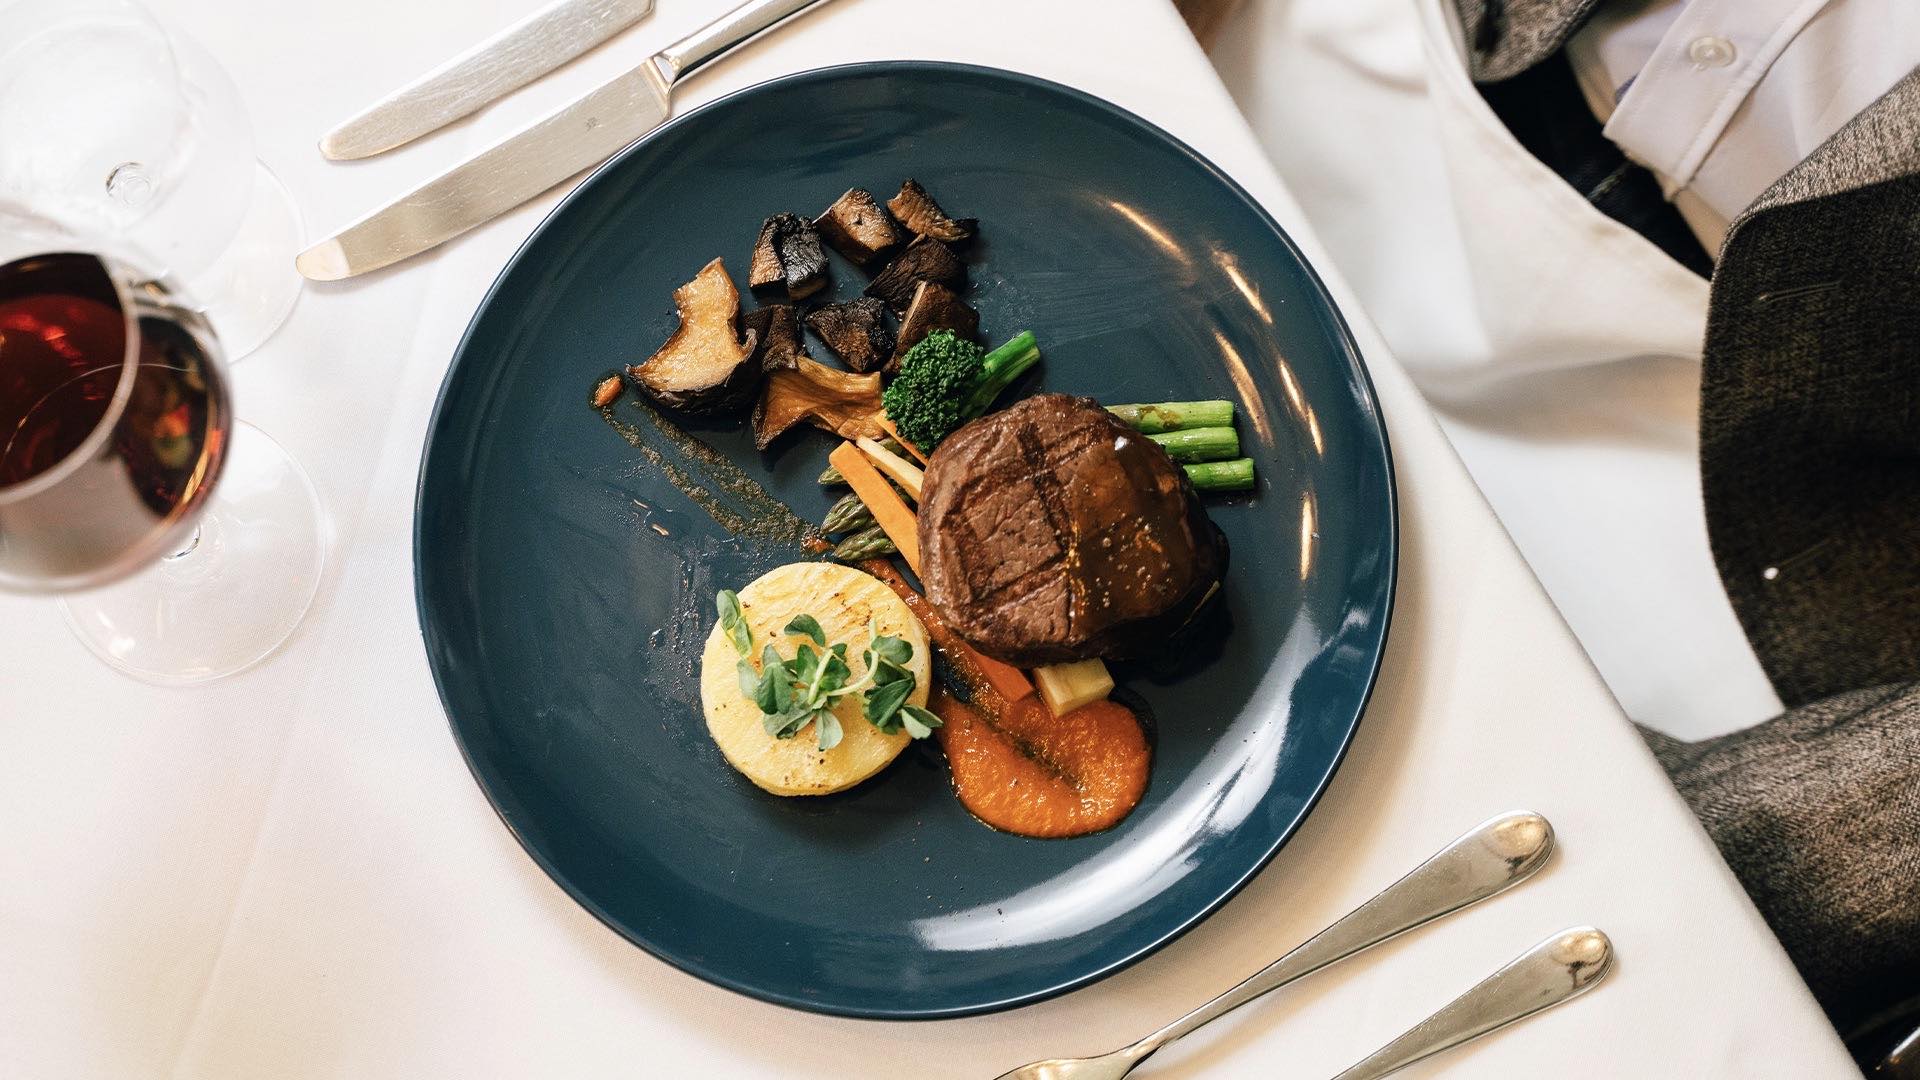 hobnob restaurants steak and vegetables on plate